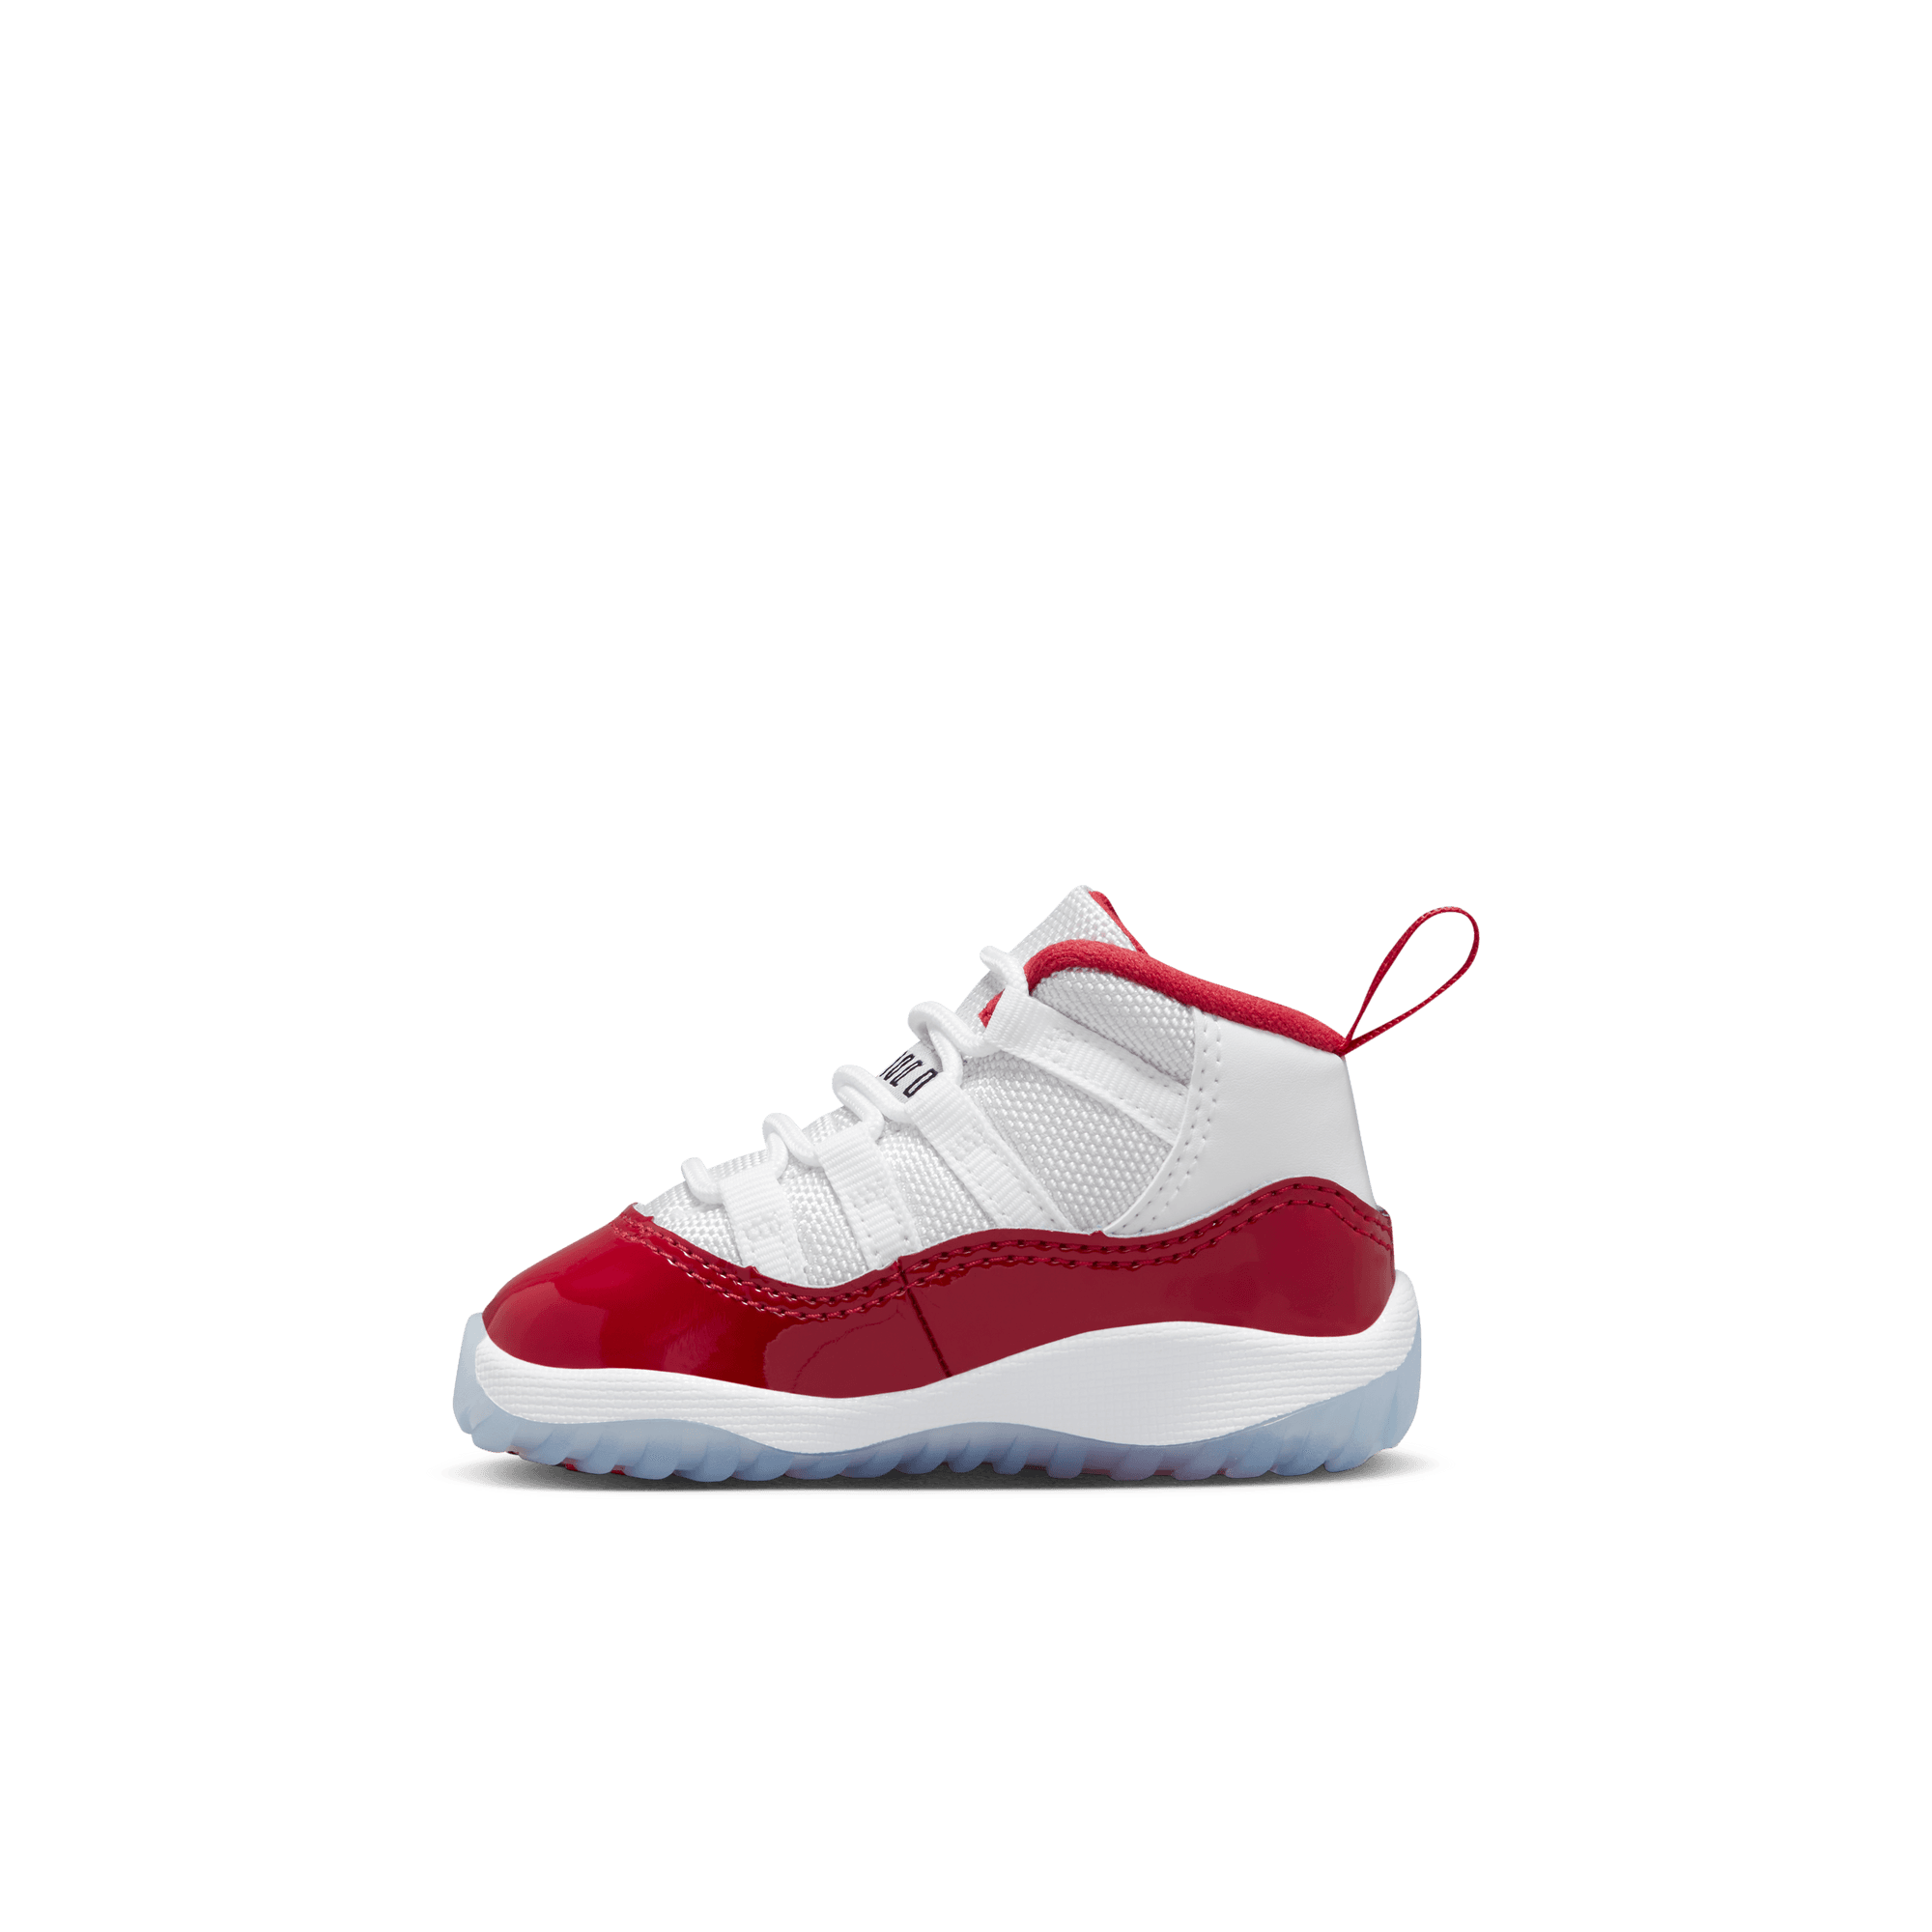 Air Jordan 11 Cherry - Toddler's - GBNY